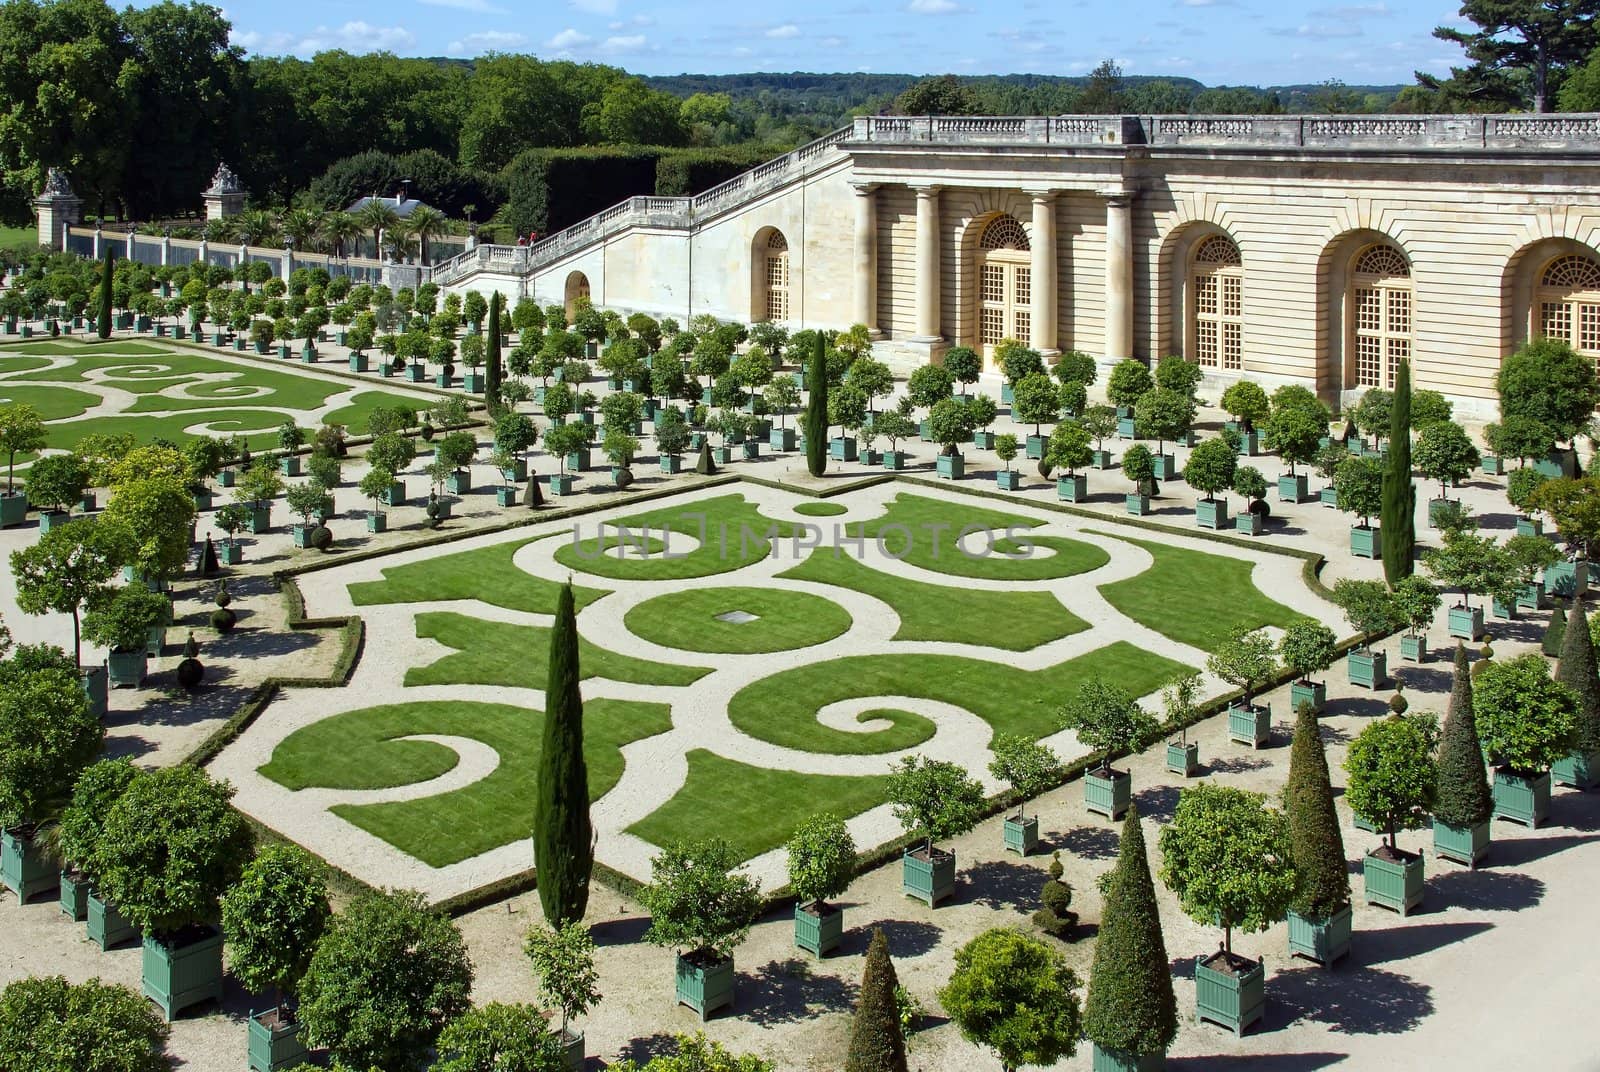 Garden of the castle of Versailles (France) by neko92vl